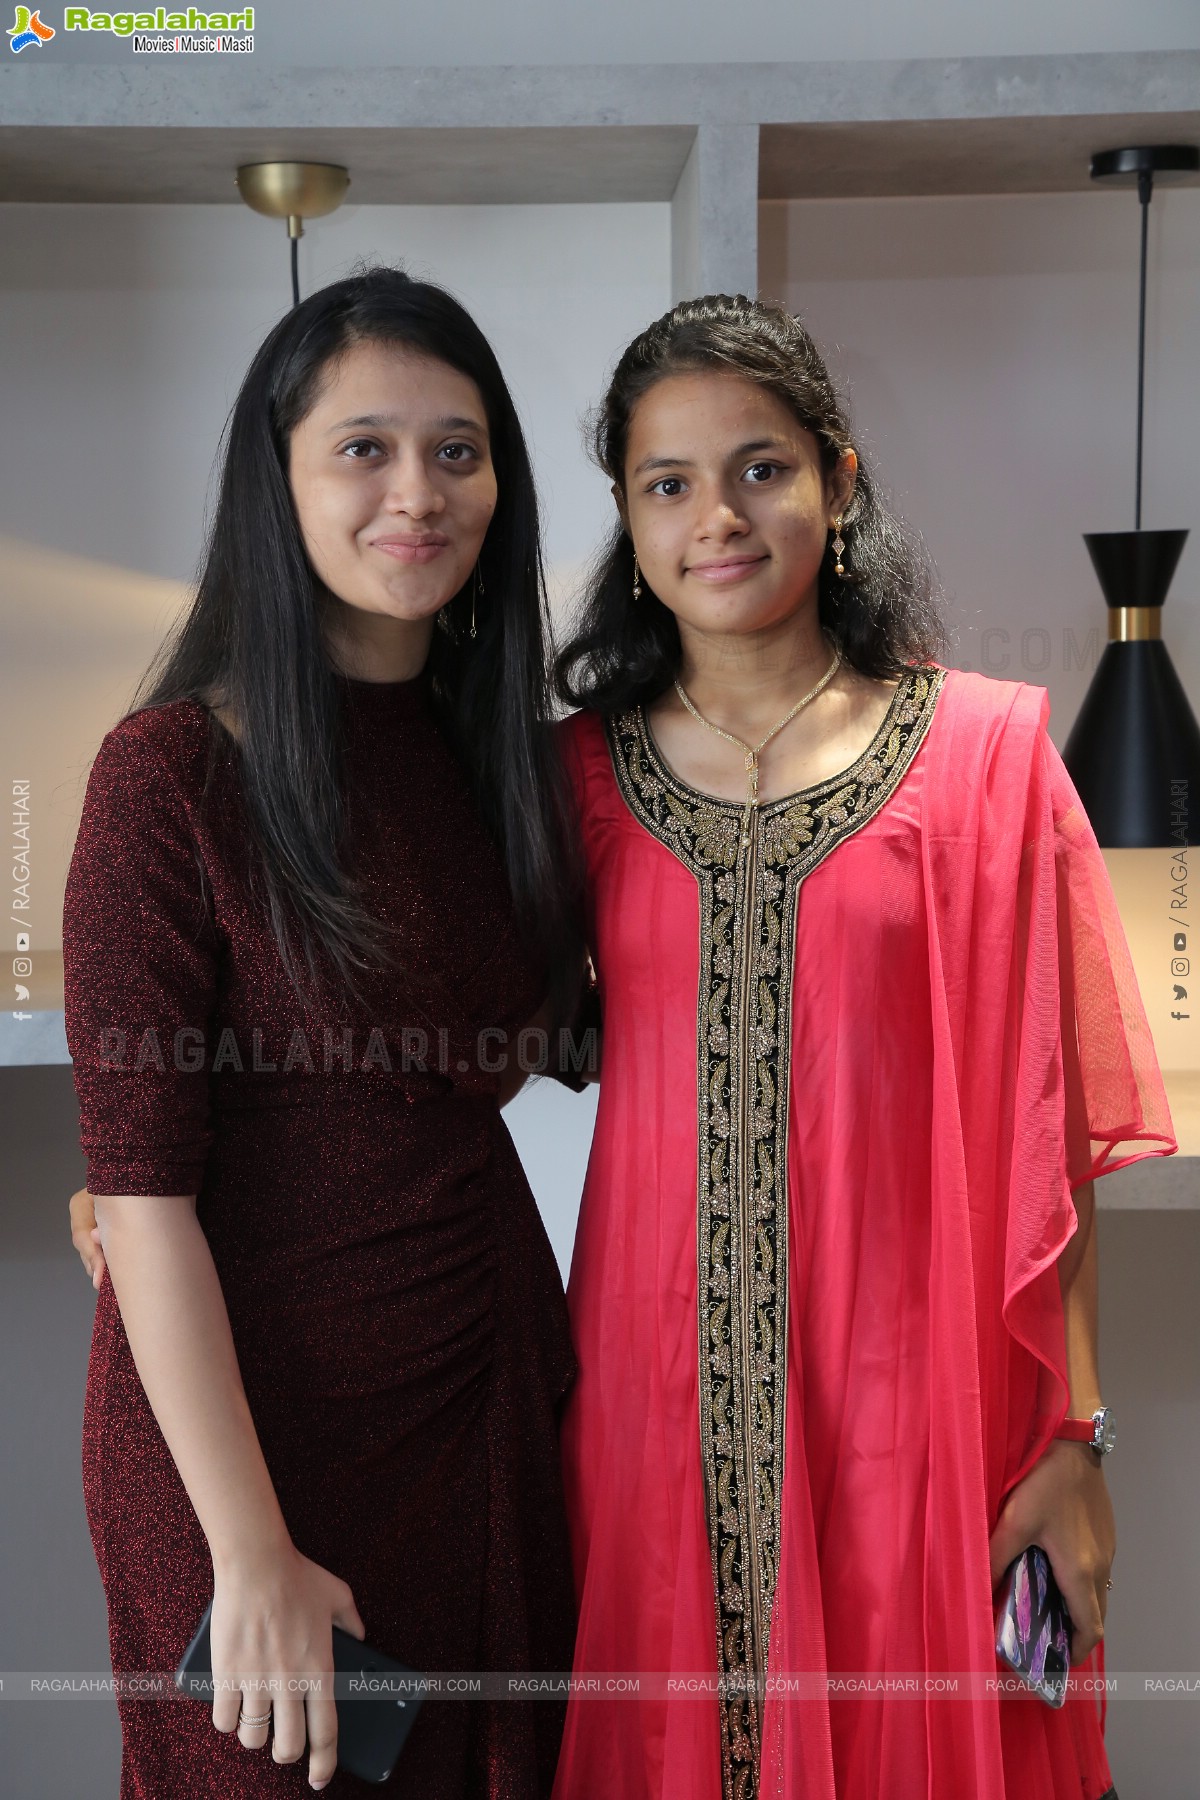 Legrand India Opens its First Design Studio in Telangana